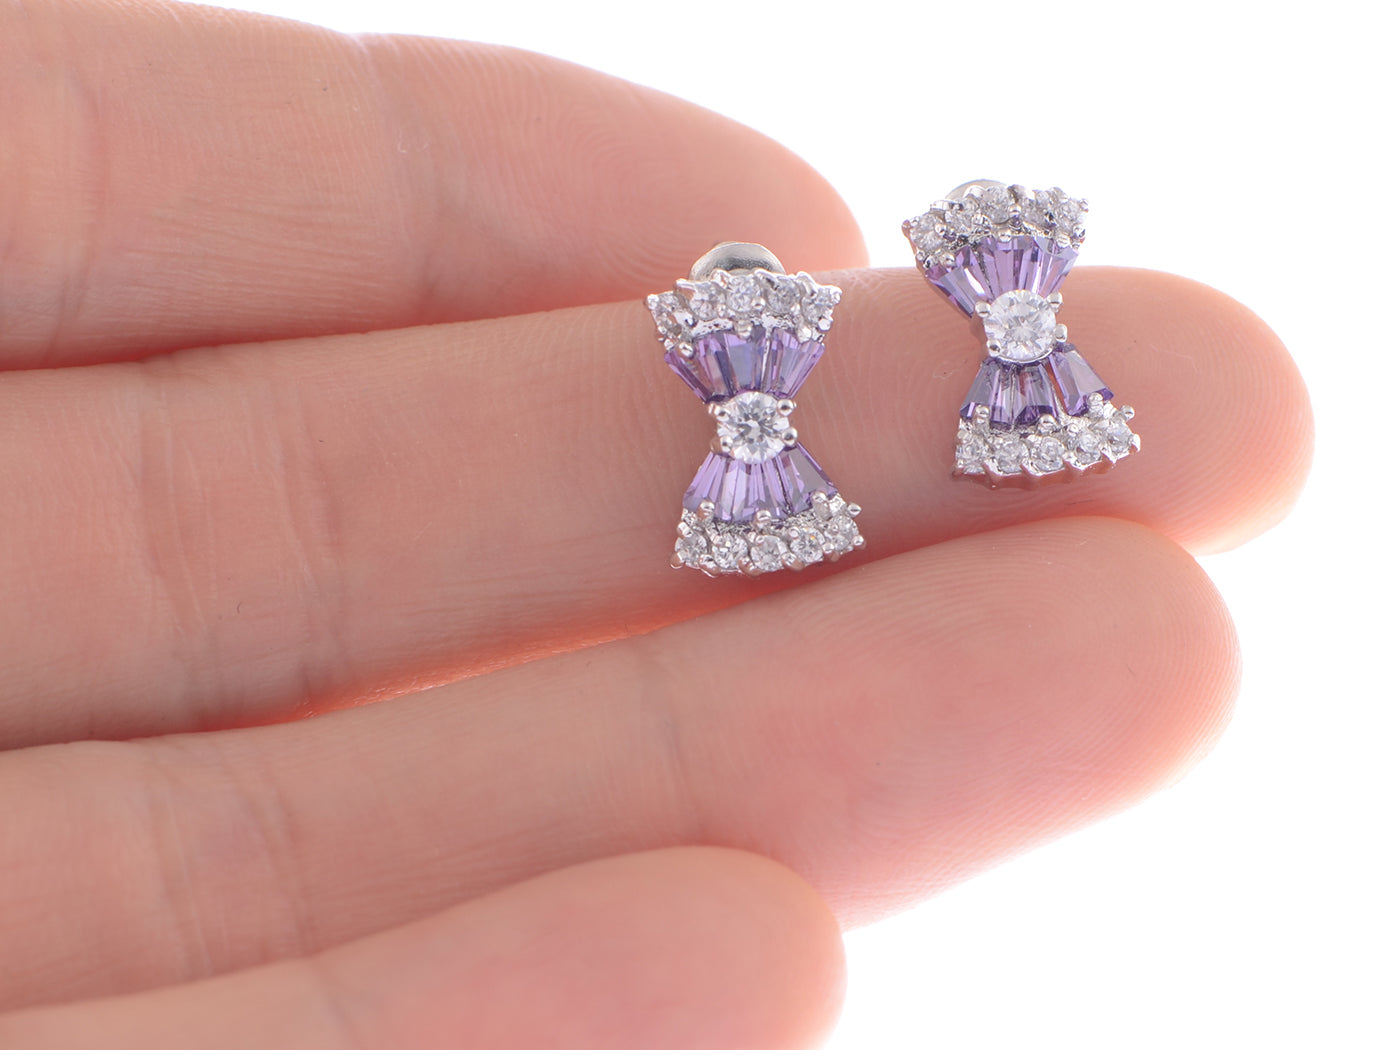 Swarovski Crystal Element Silver Purple Vertical Bow Ribbon Tie Stud Earrings